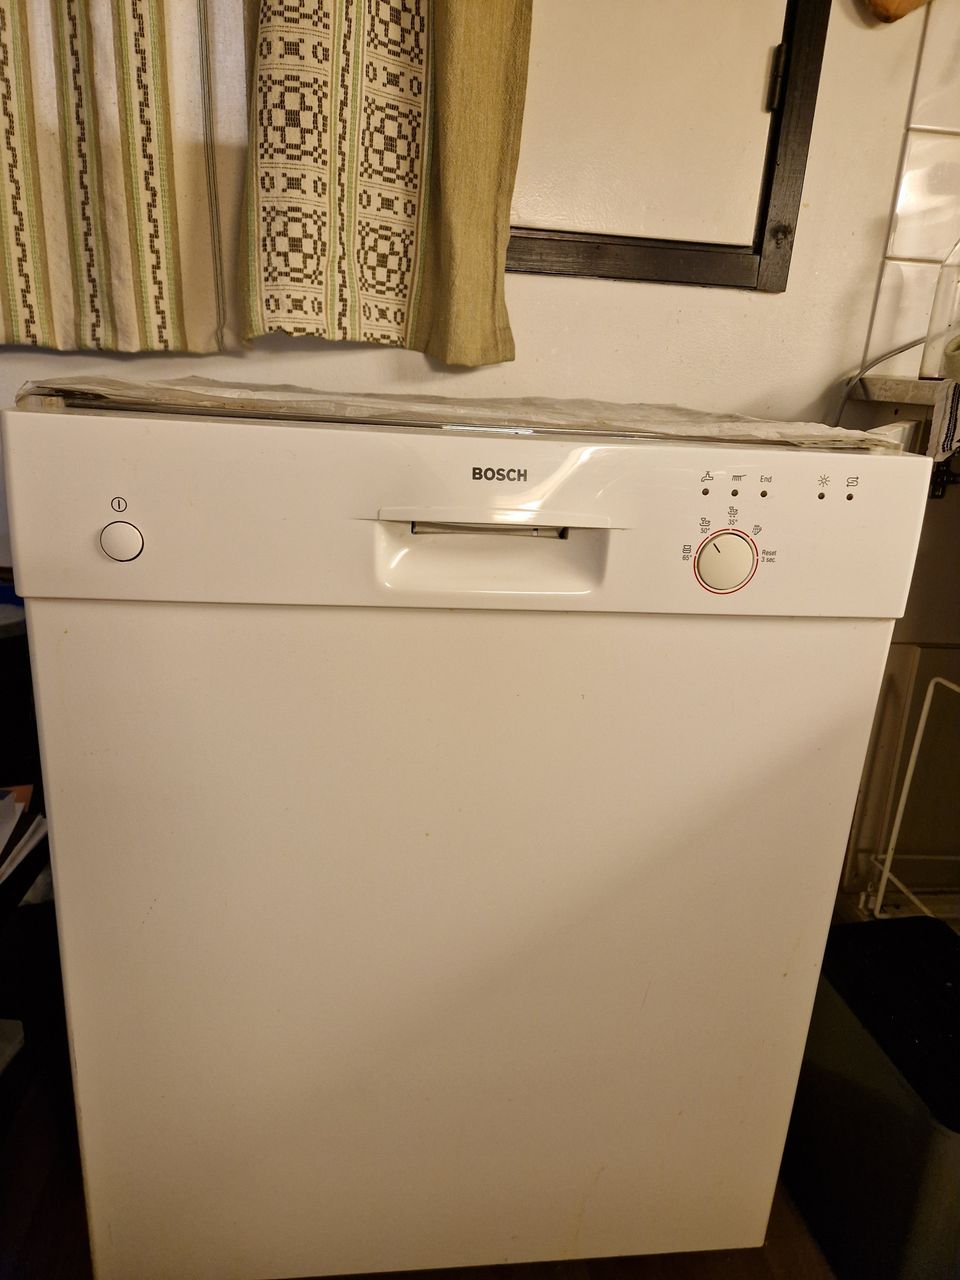 Bosch dishwasher in very good condition